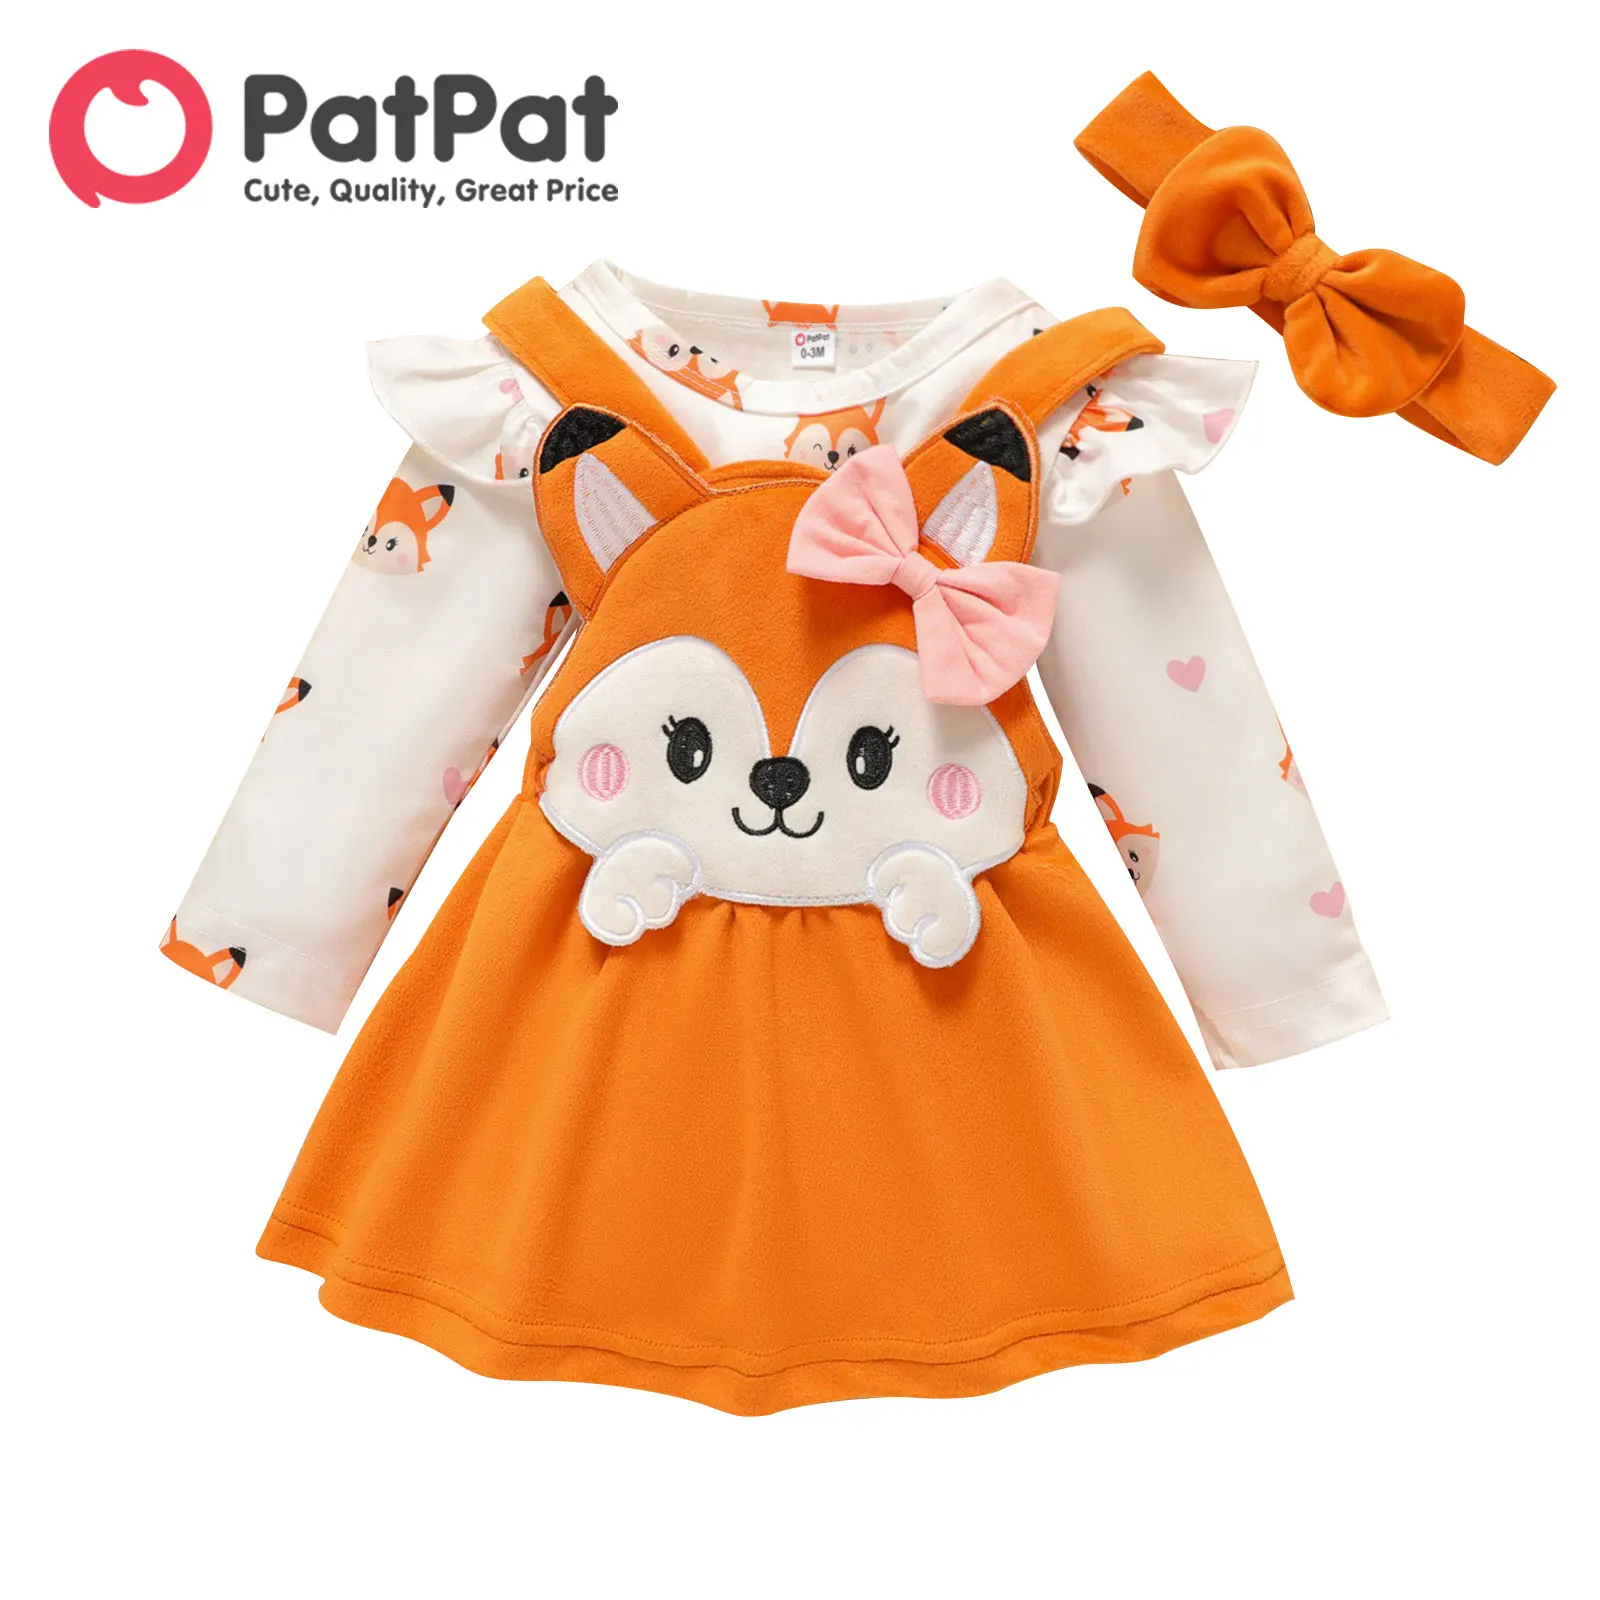 

PatPat Newborn Baby Girl Clothes New Born Babies Items Costume 3pcs Fox Print Jumpsuit Romper Overall Dress with Headband Set